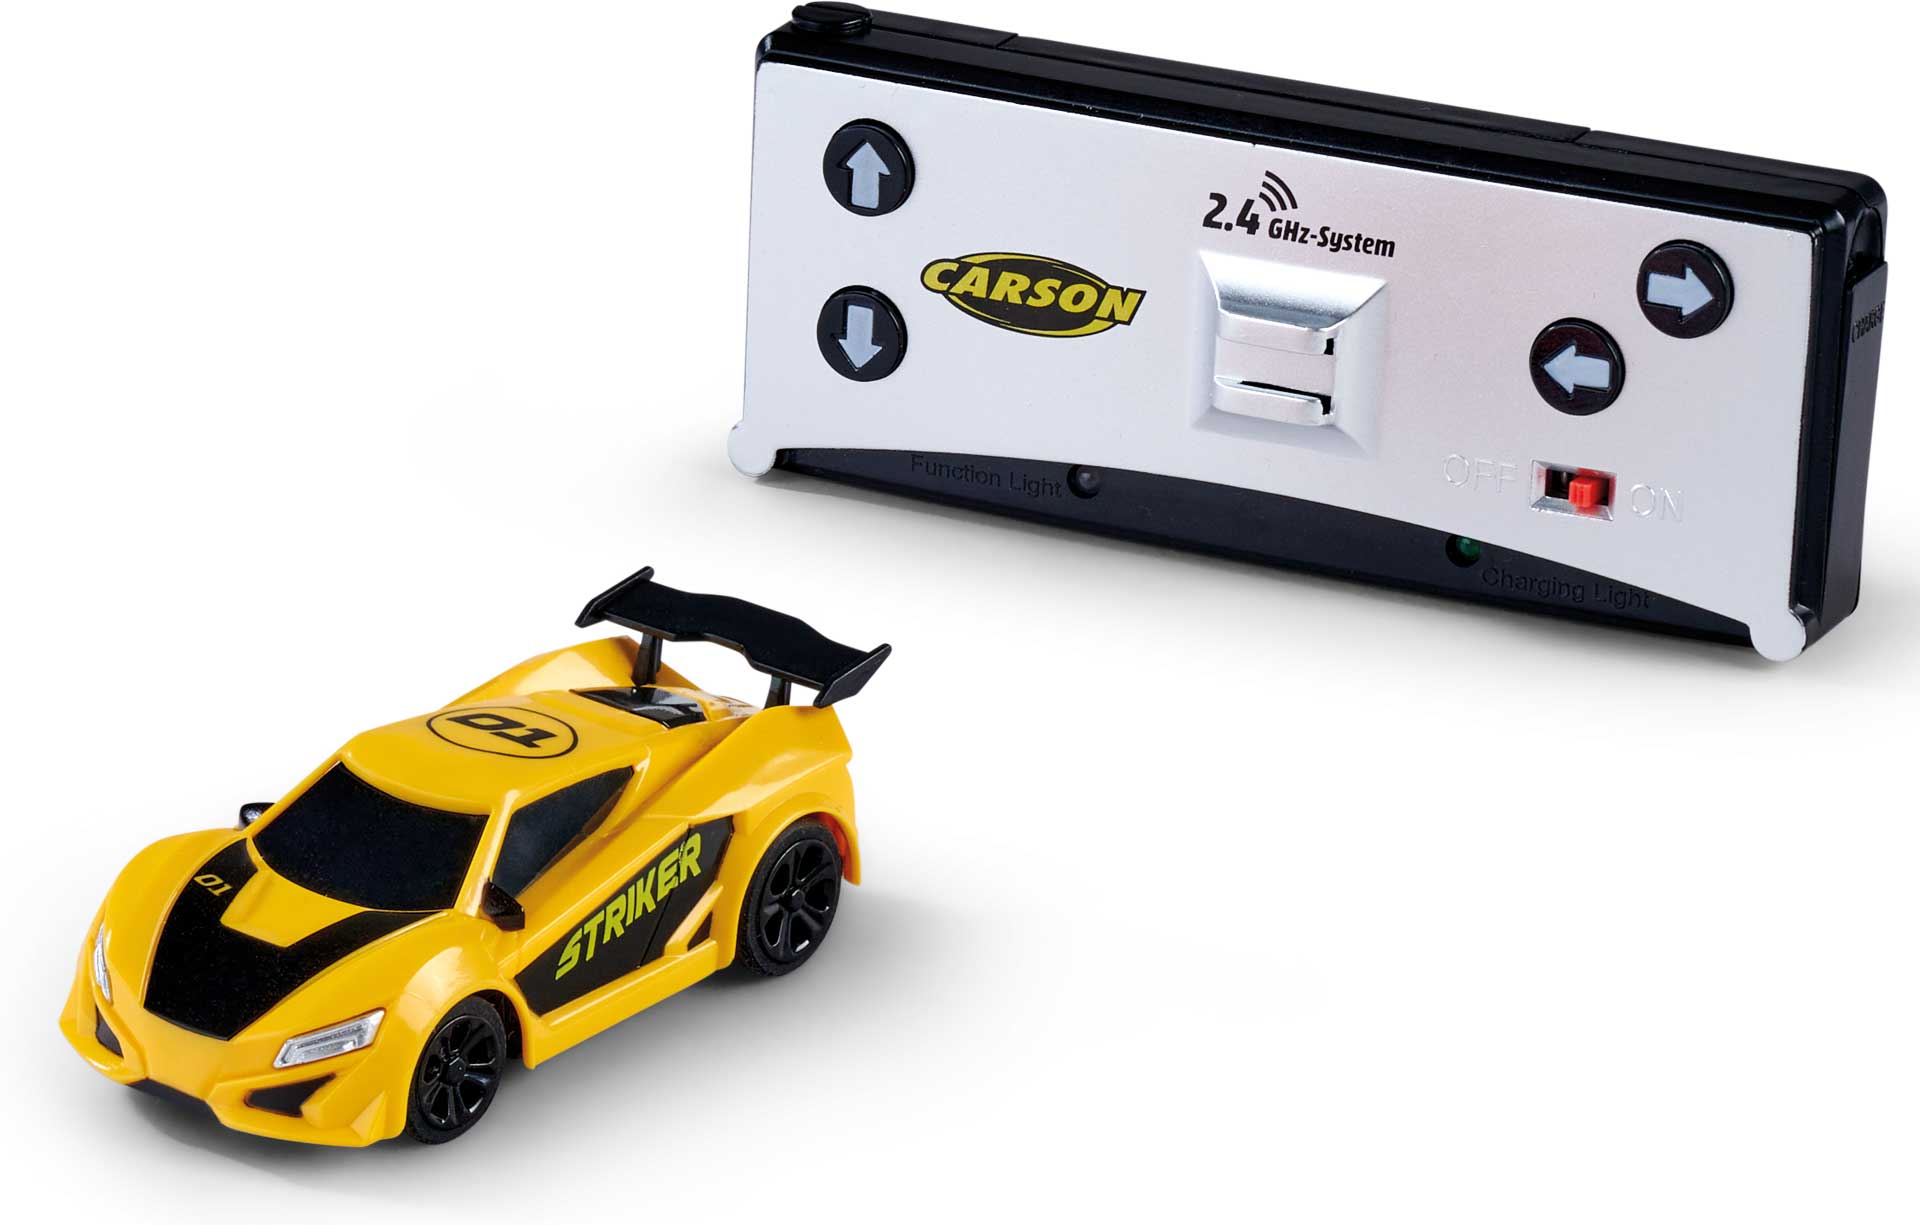 CARSON 1:60 Nano Racer Striker 2.4GHz yellow